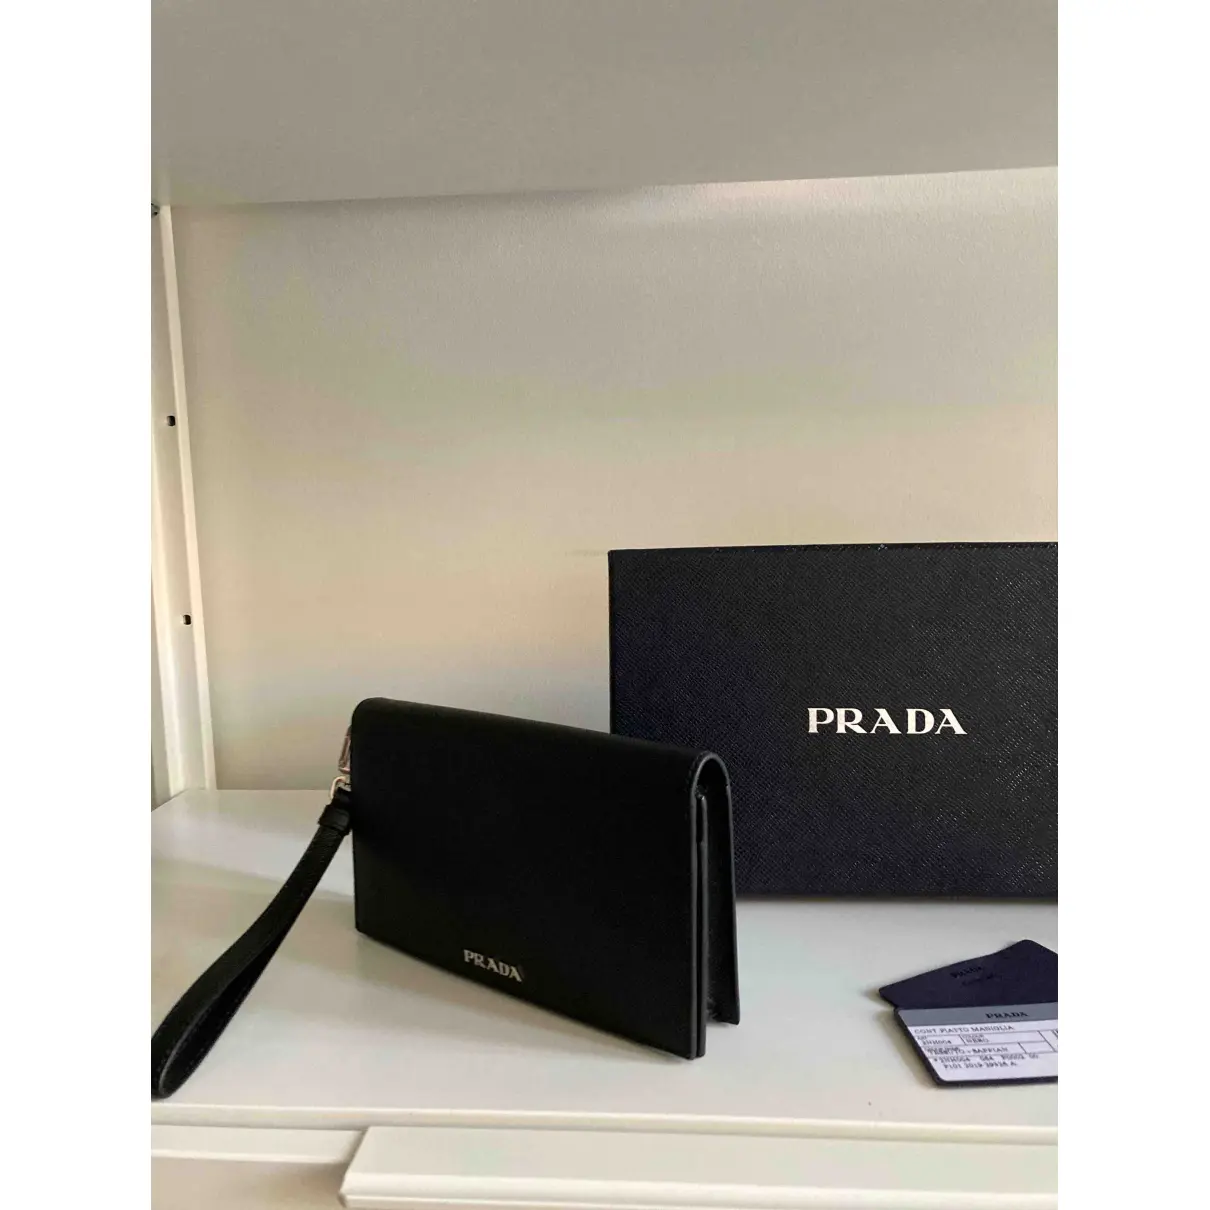 Buy Prada Leather small bag online